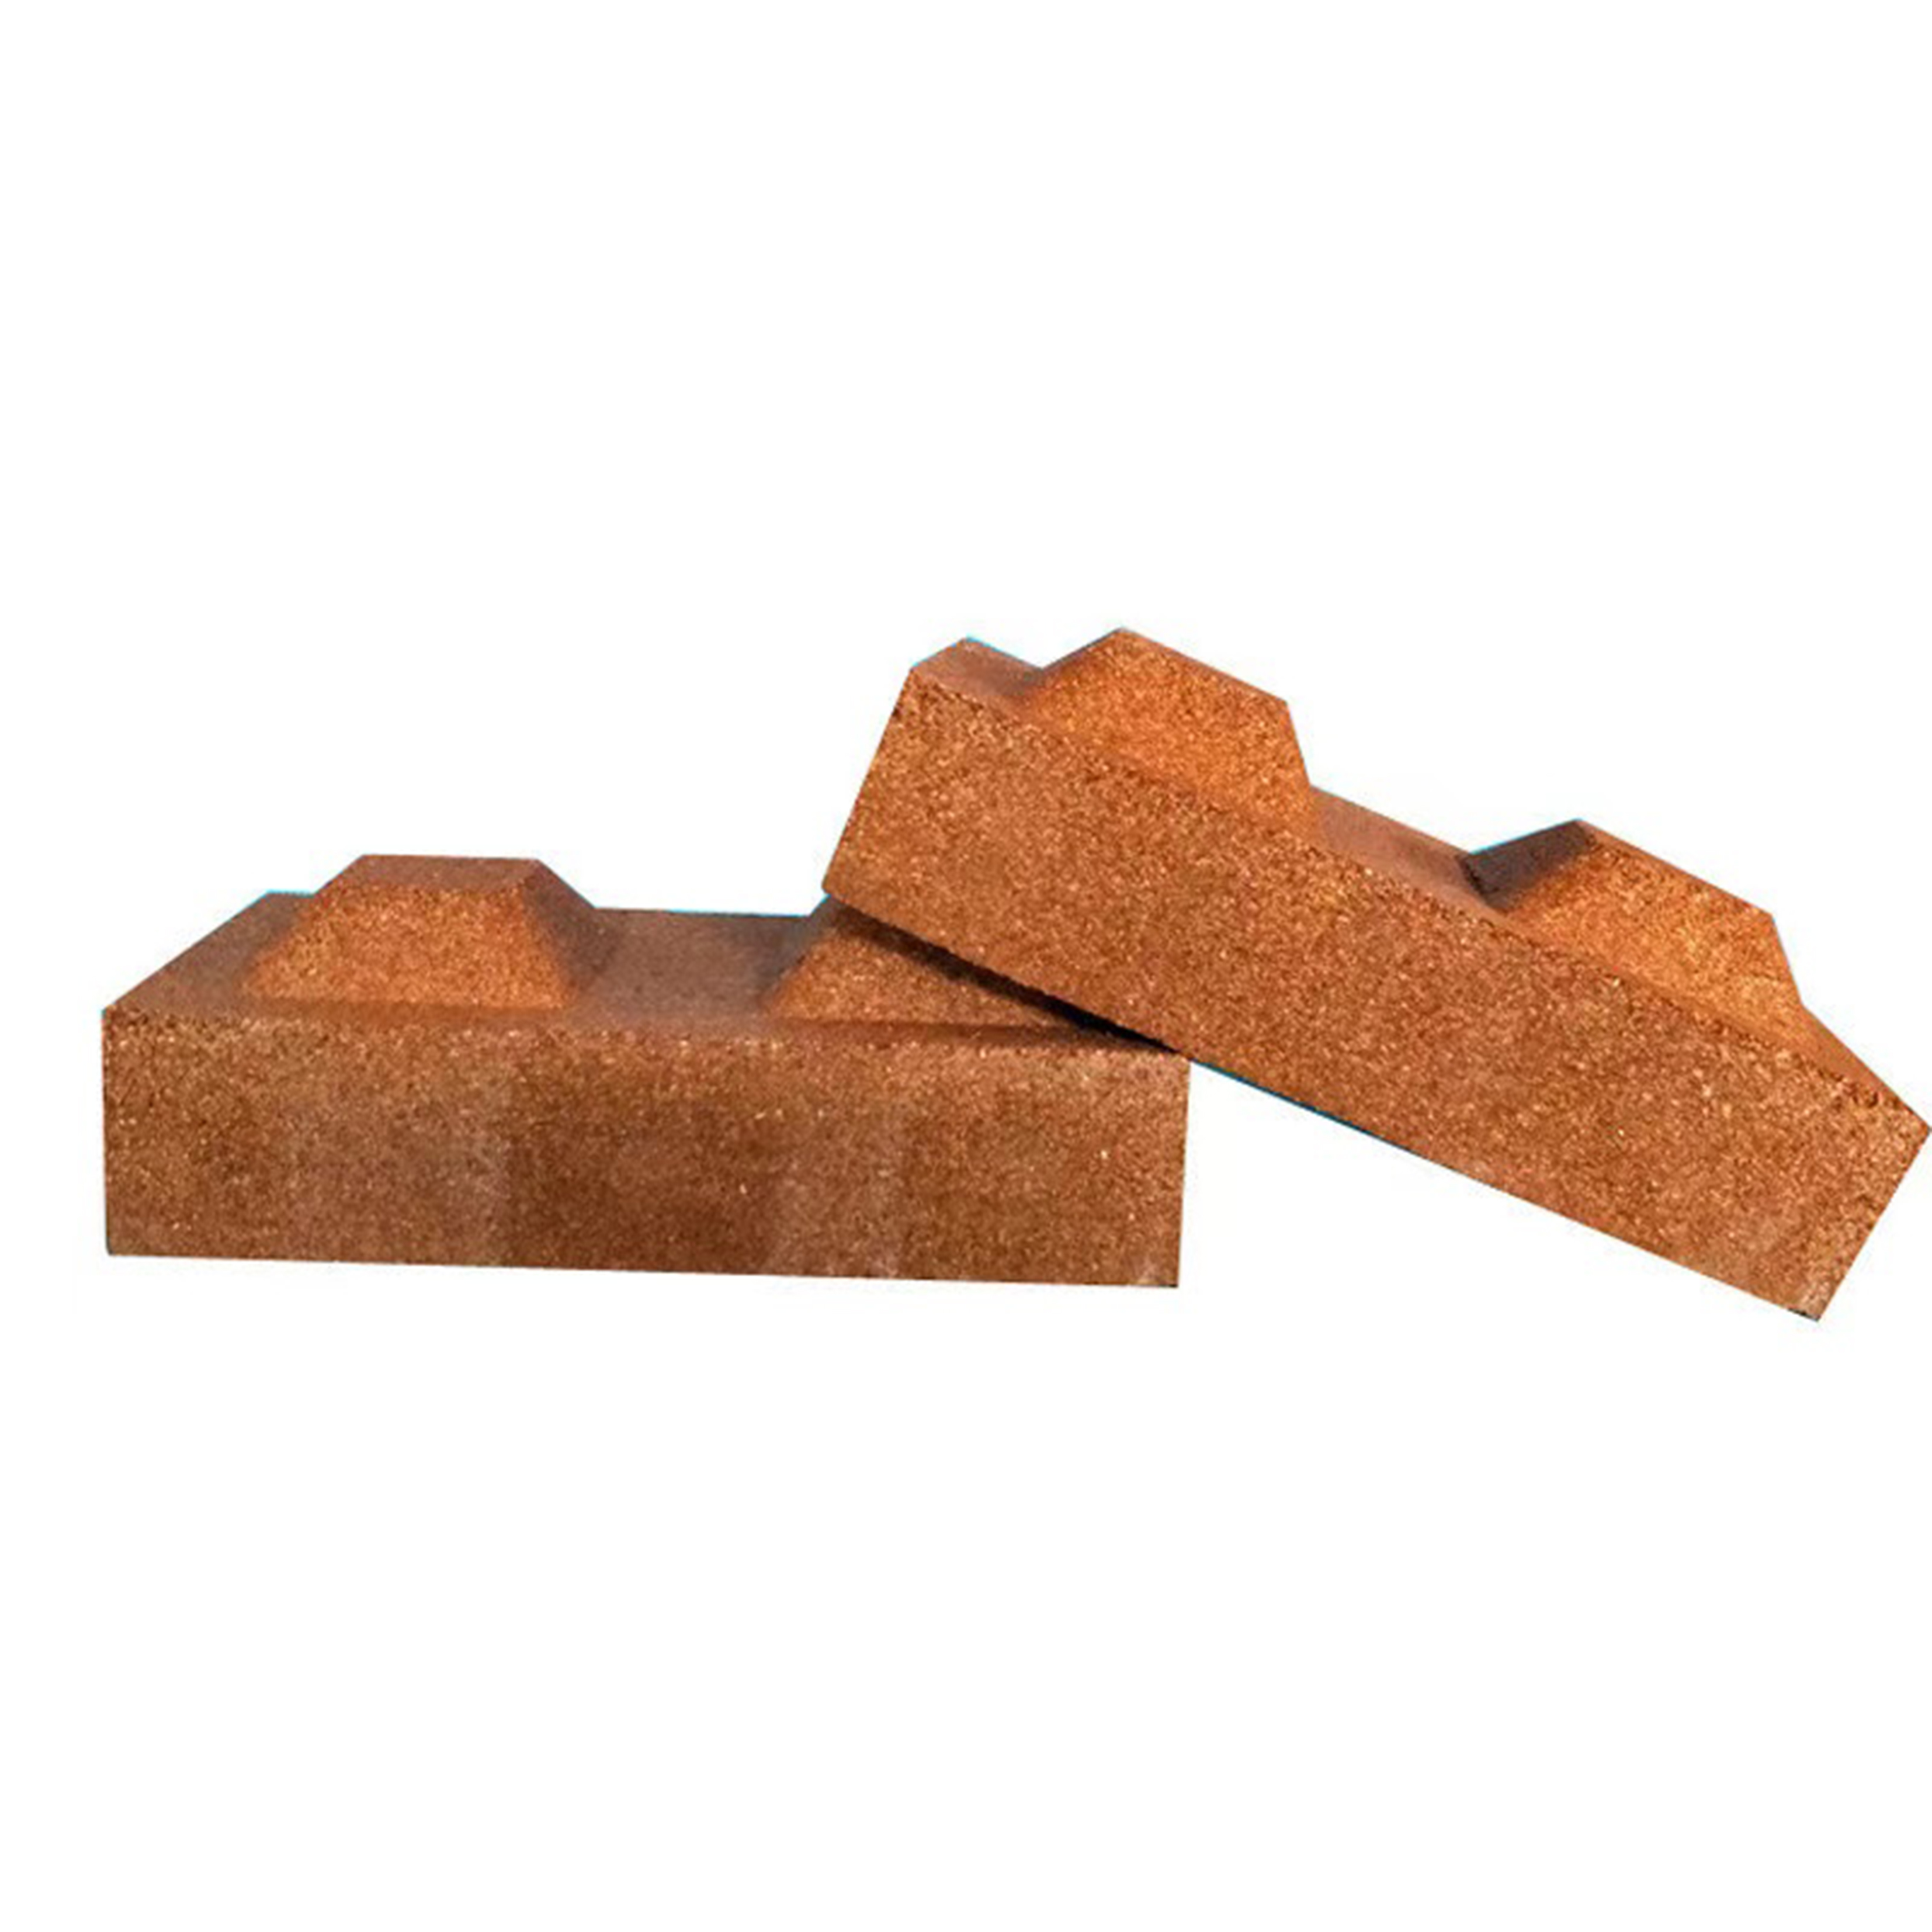 Factory direct fireproof bricks, fire retardant expansion, good quality, high temperature sealing